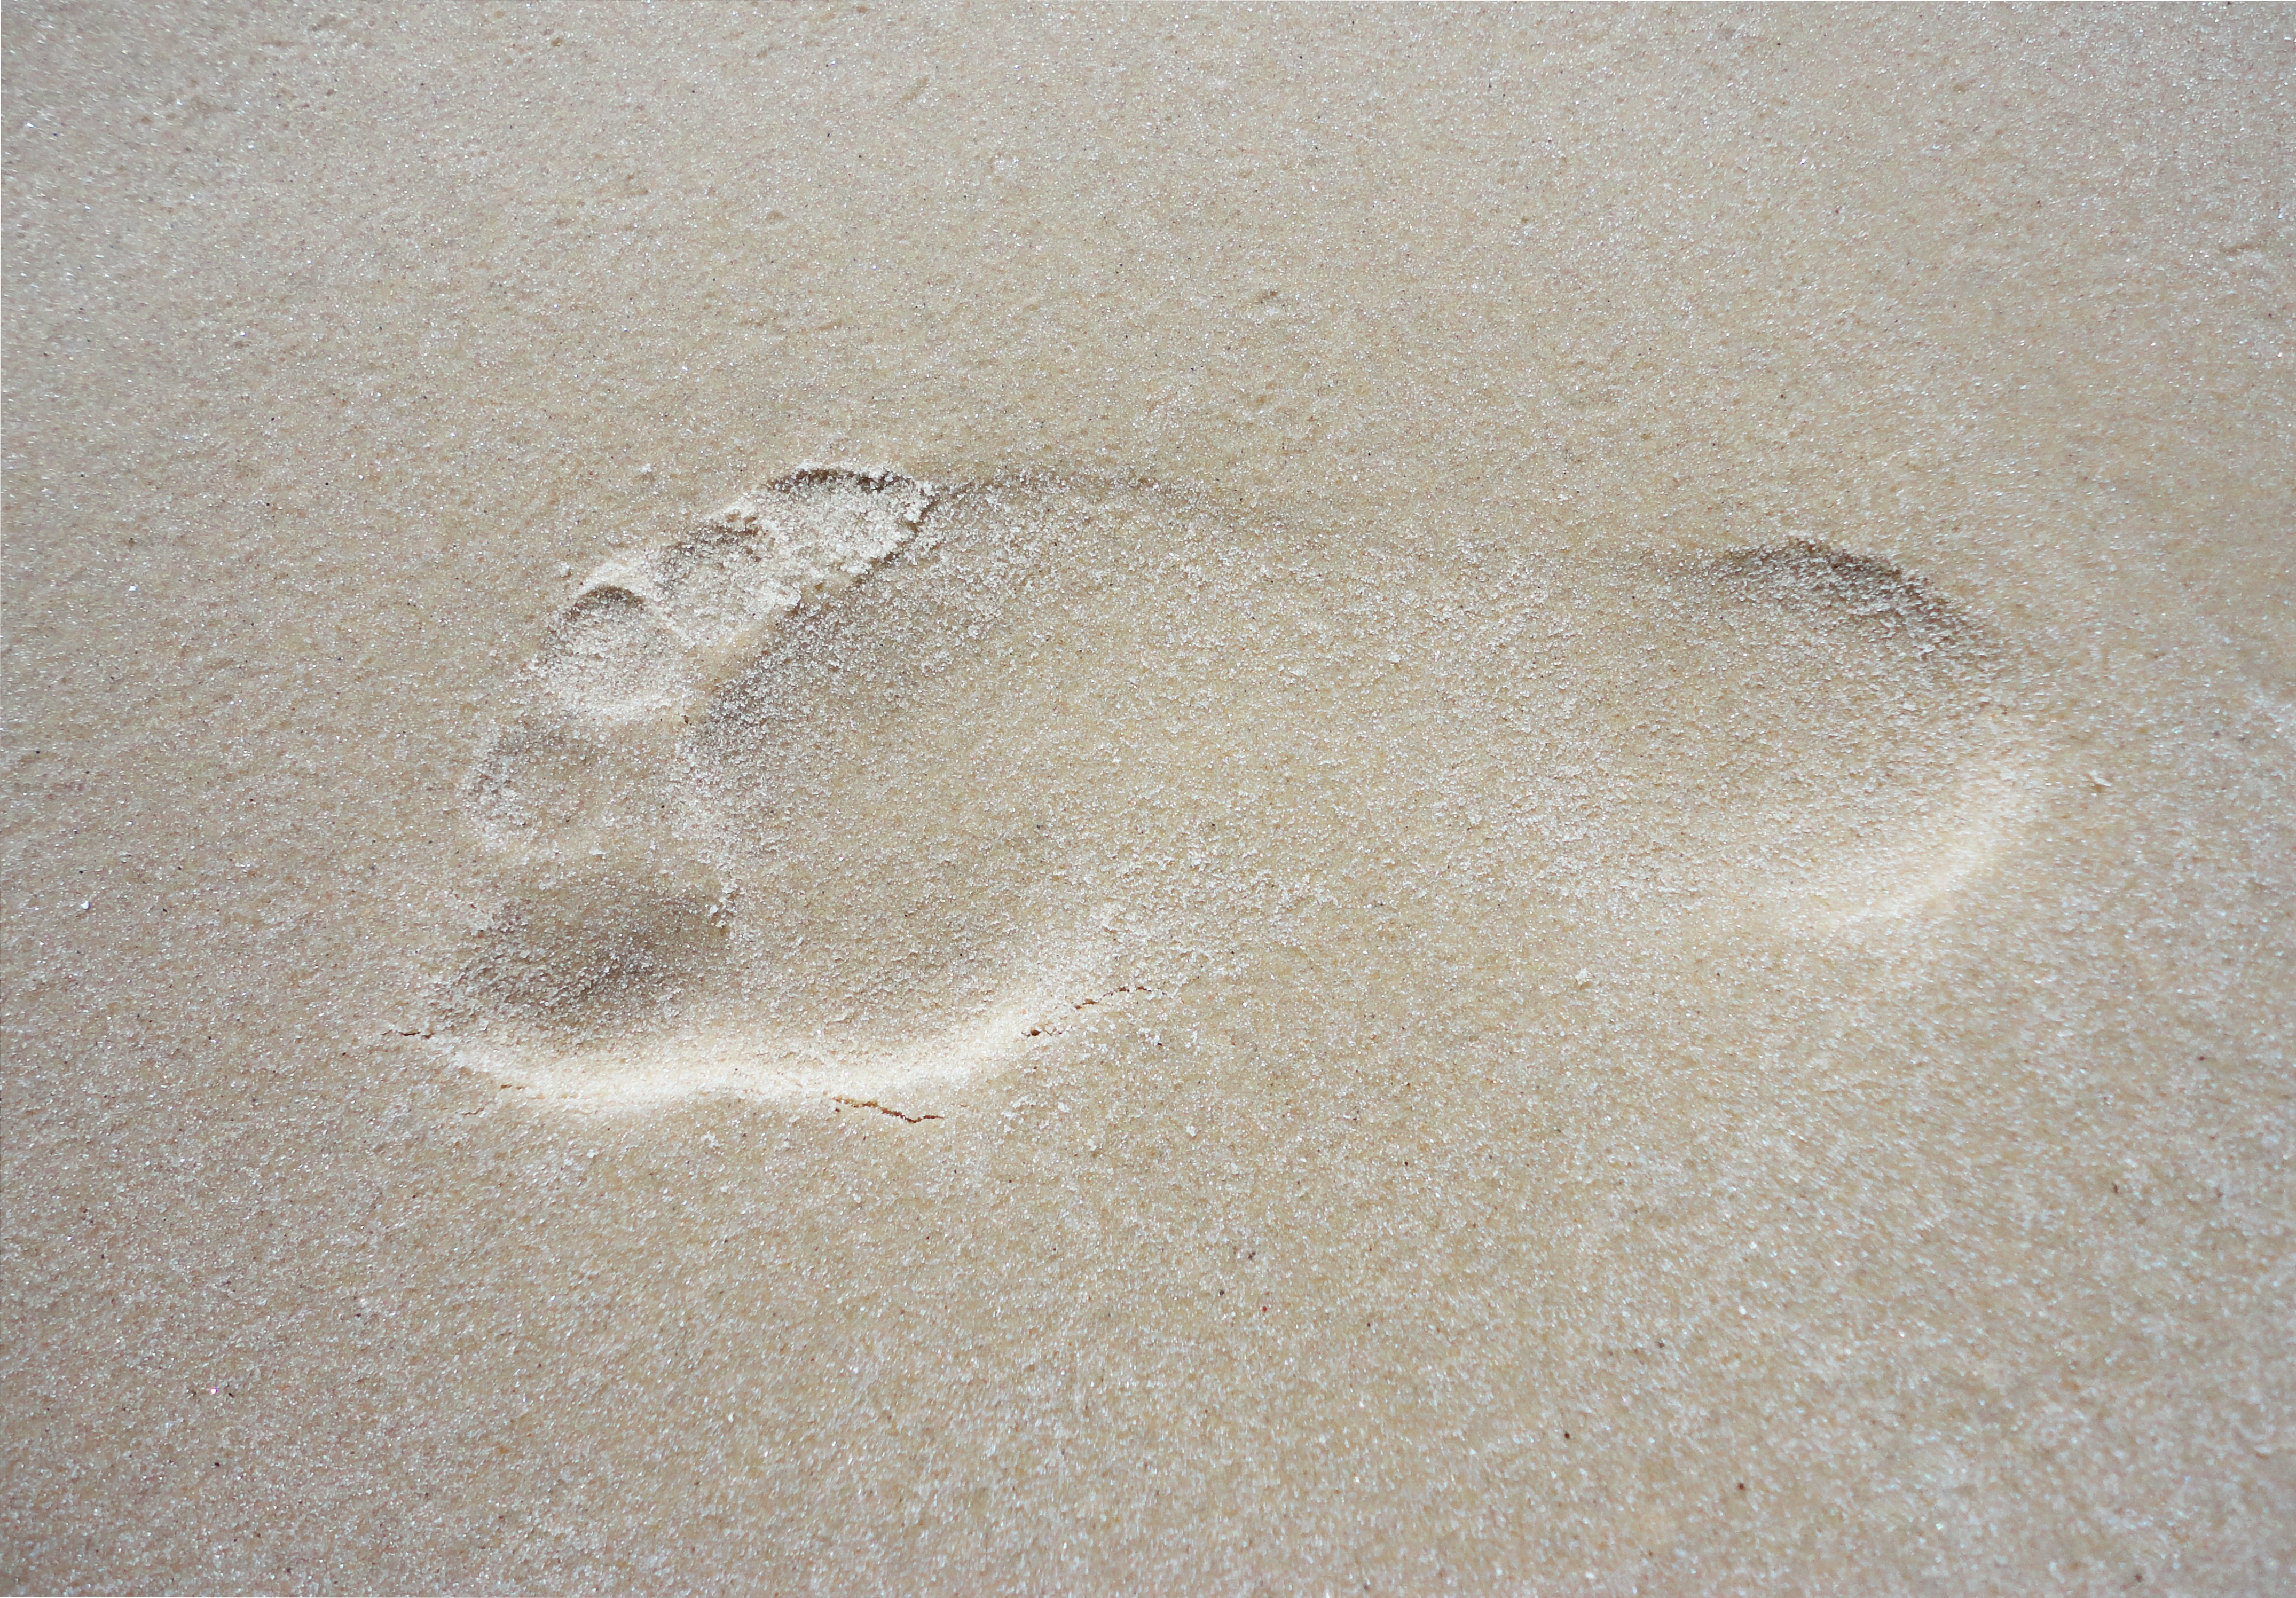 human foot print